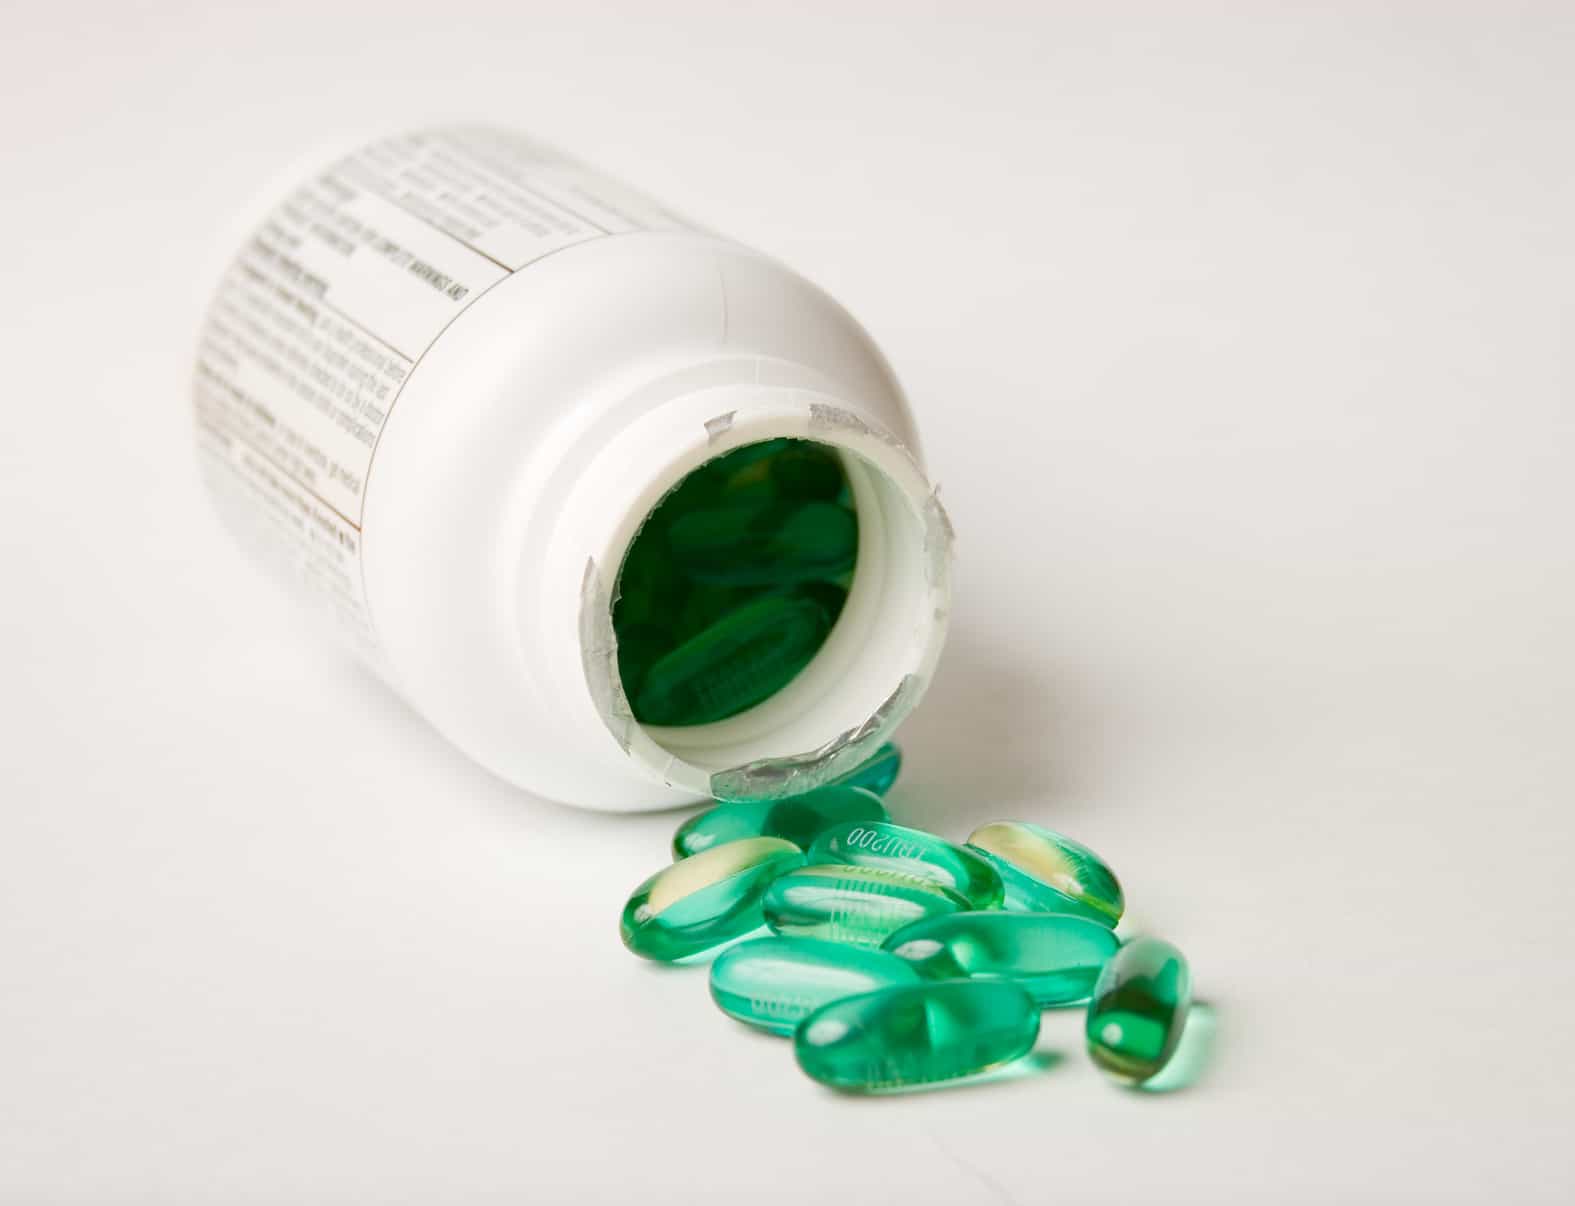 Green pills spilling from medicine bottle.